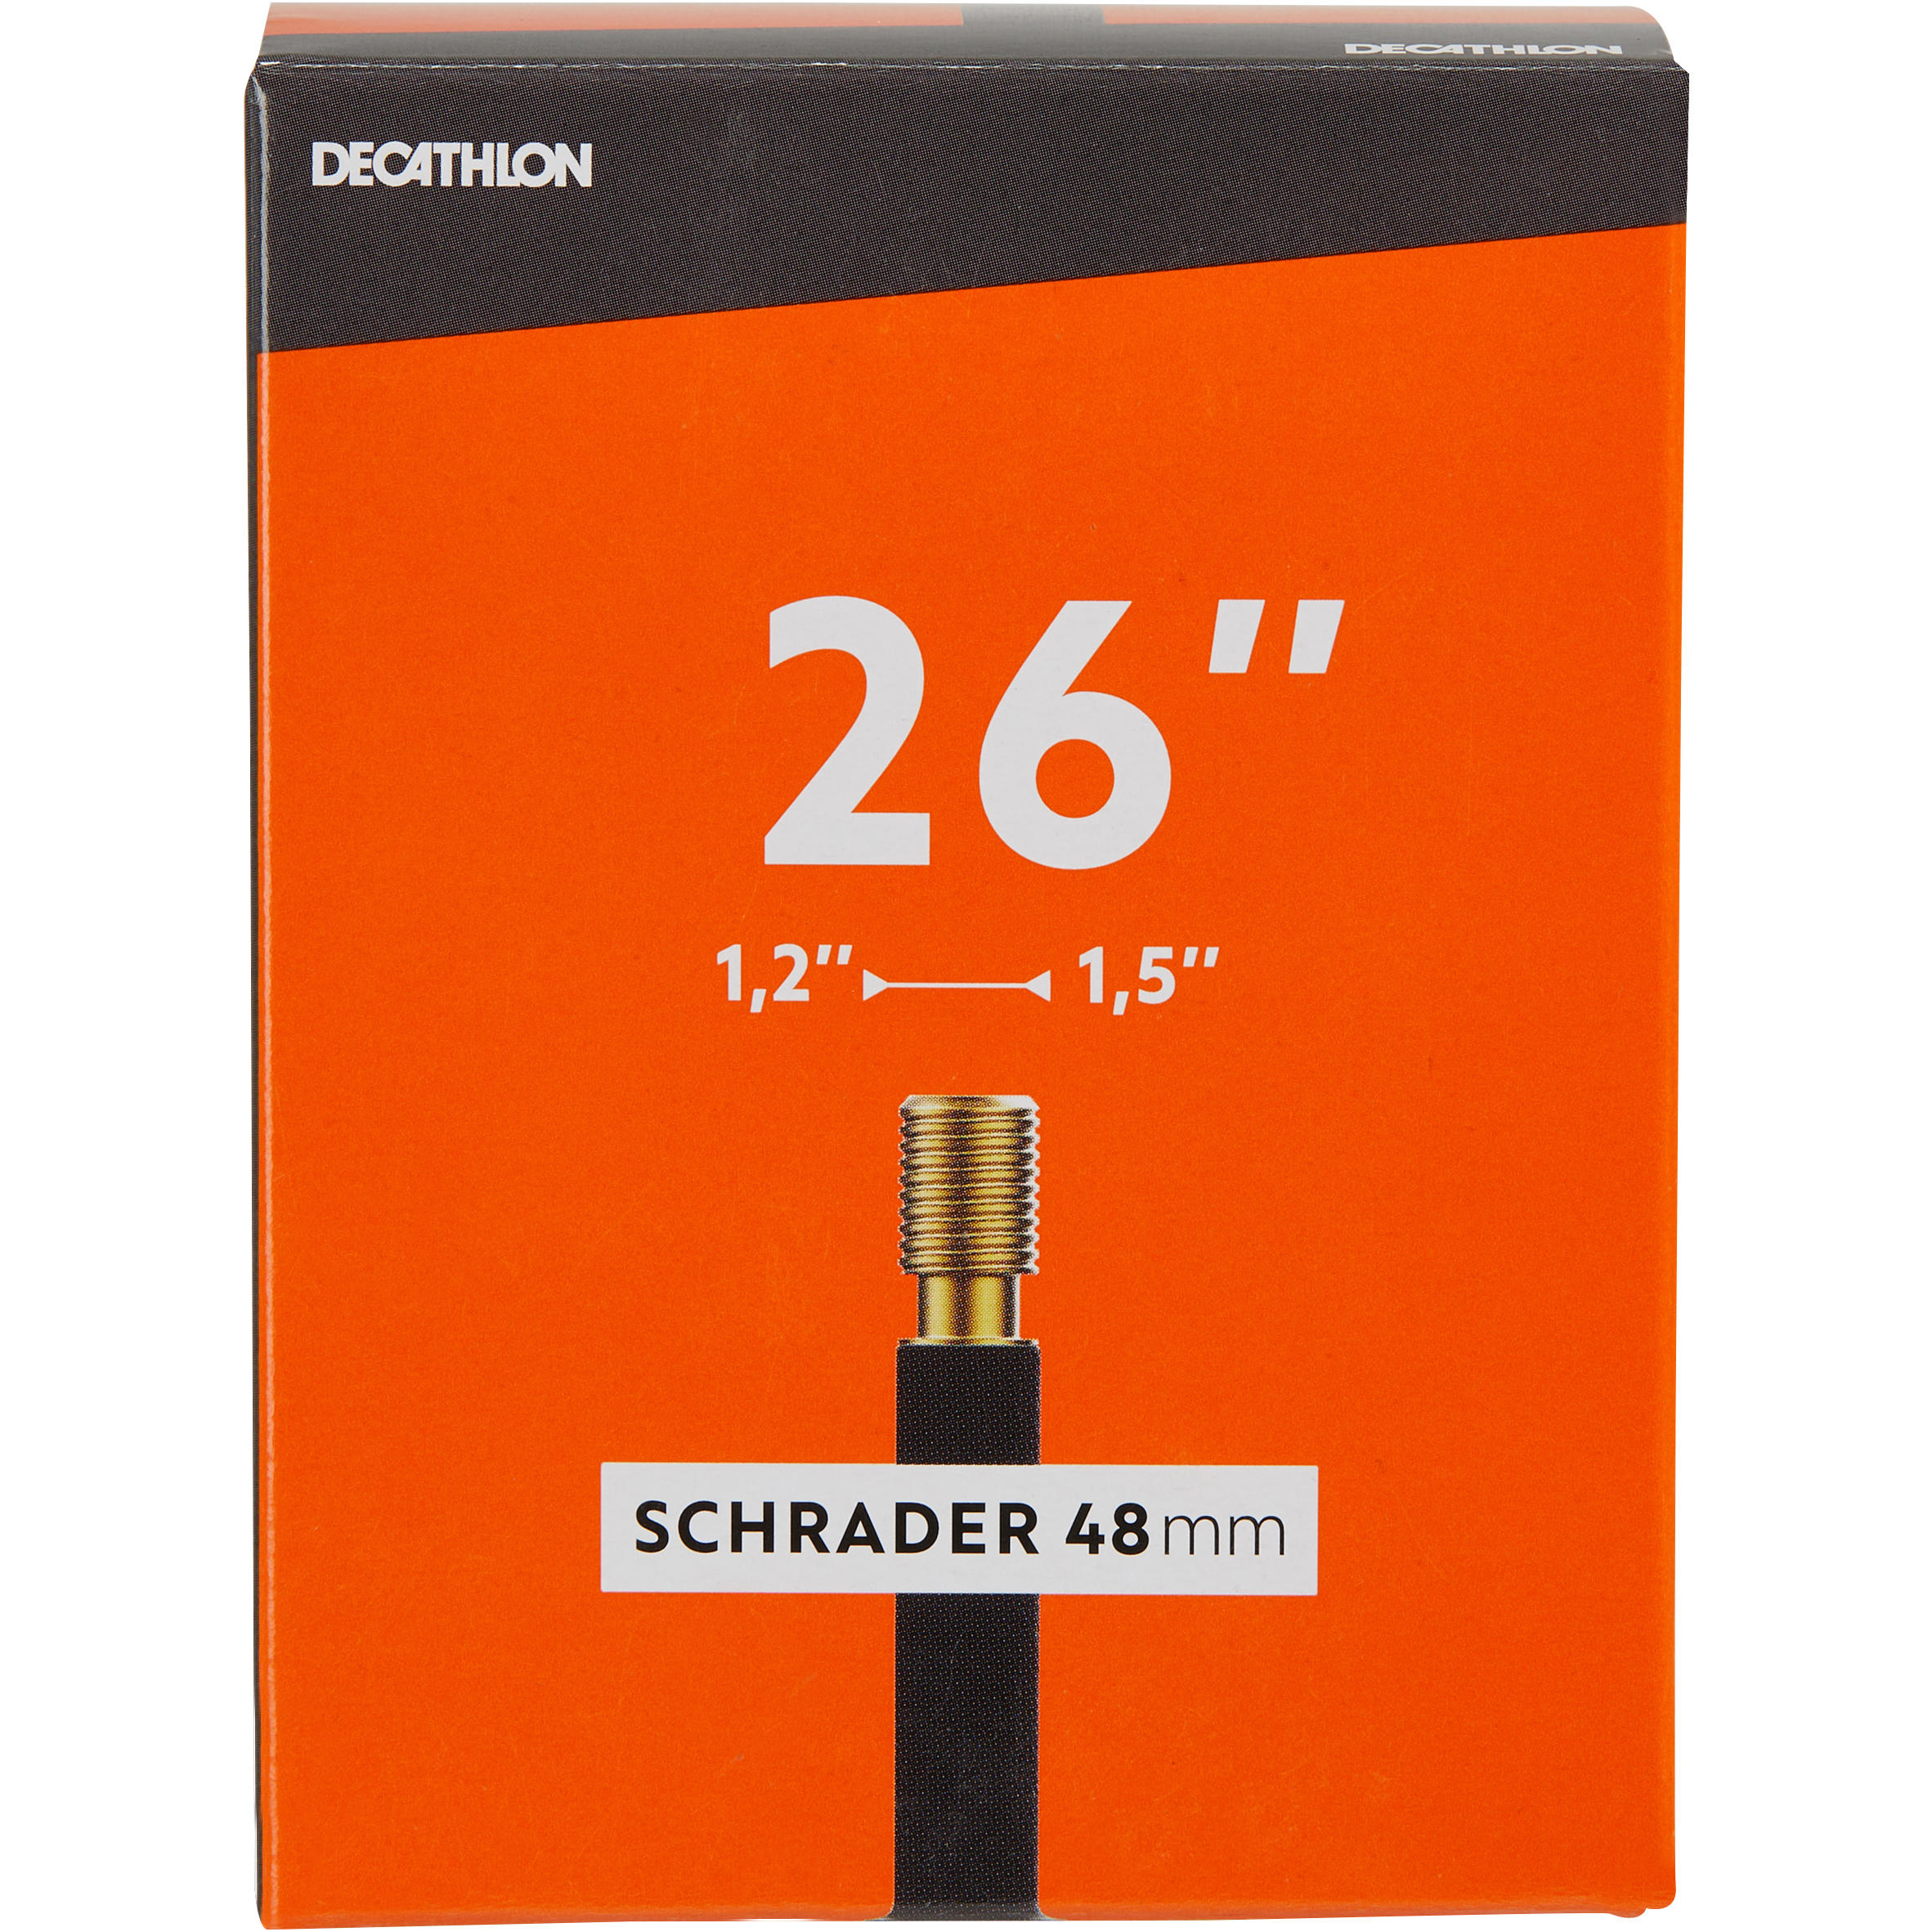 Chambre à air 26 x 1,2/1,5 valve Schrader 48 mm - DECATHLON